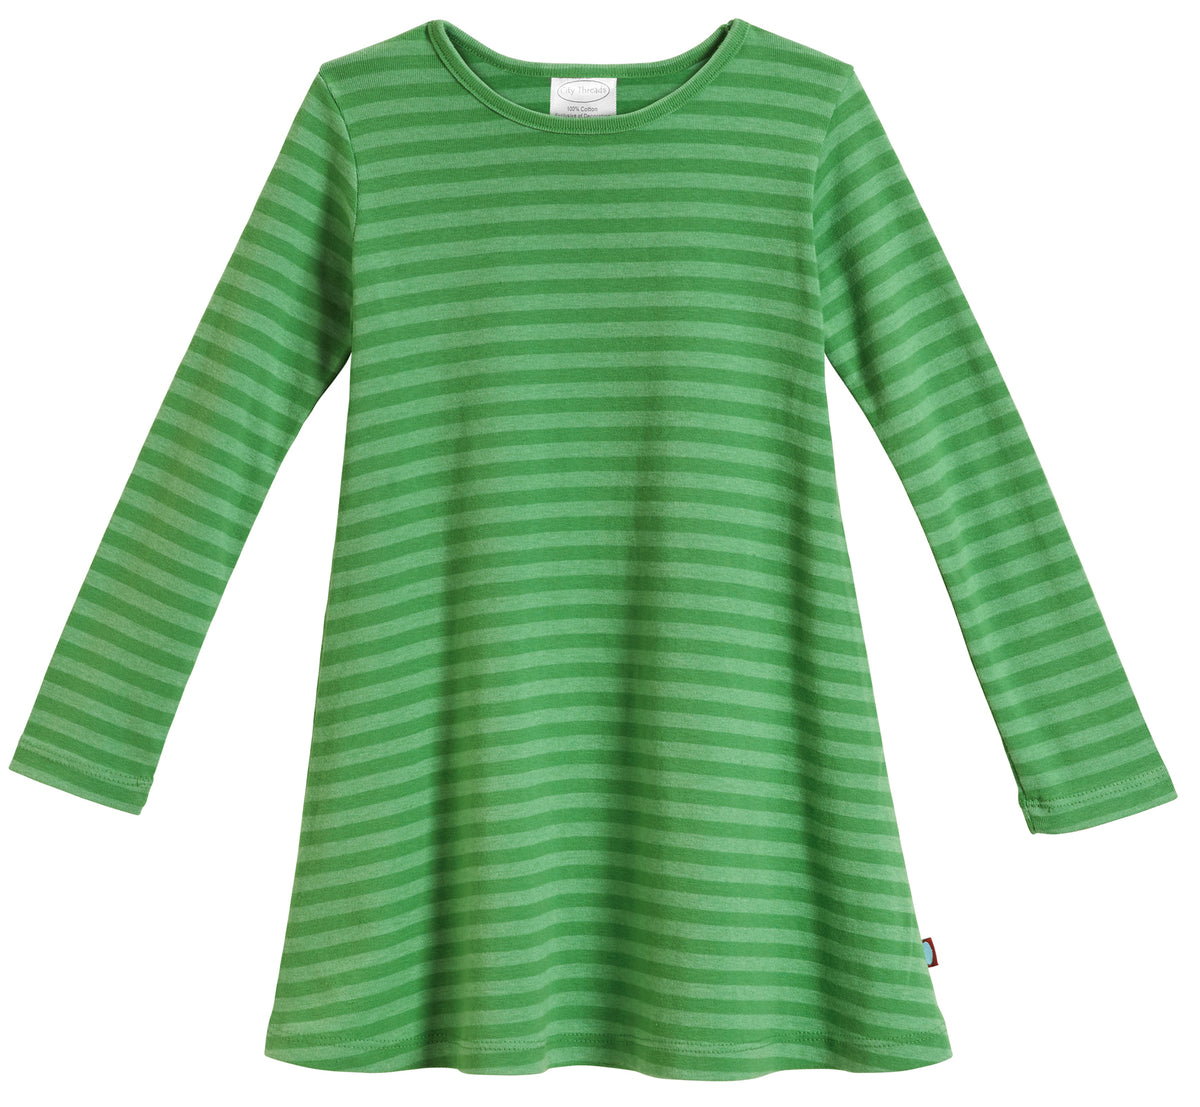 Girls Striped Long Sleeve Dress-Seconds| Damage - Elf Green